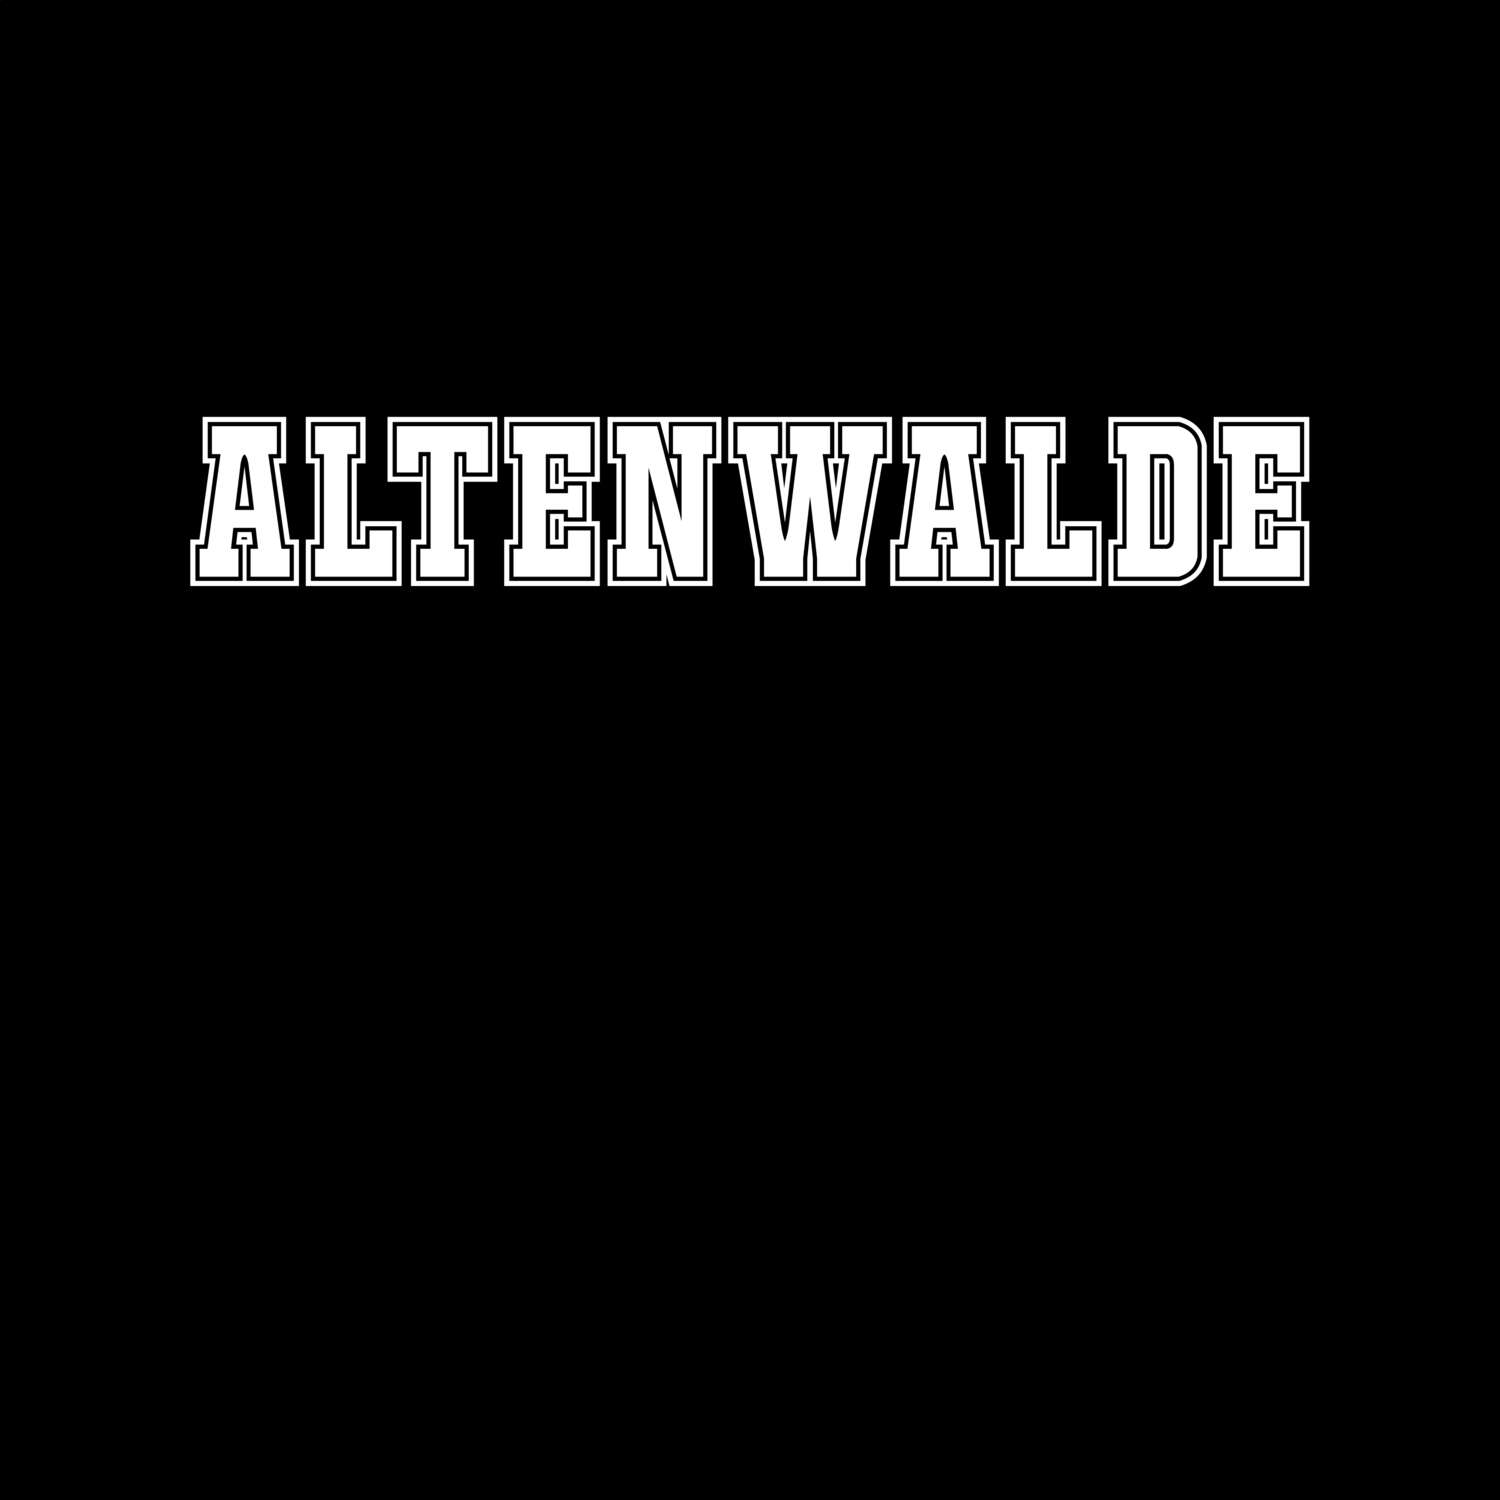 Altenwalde T-Shirt »Classic«